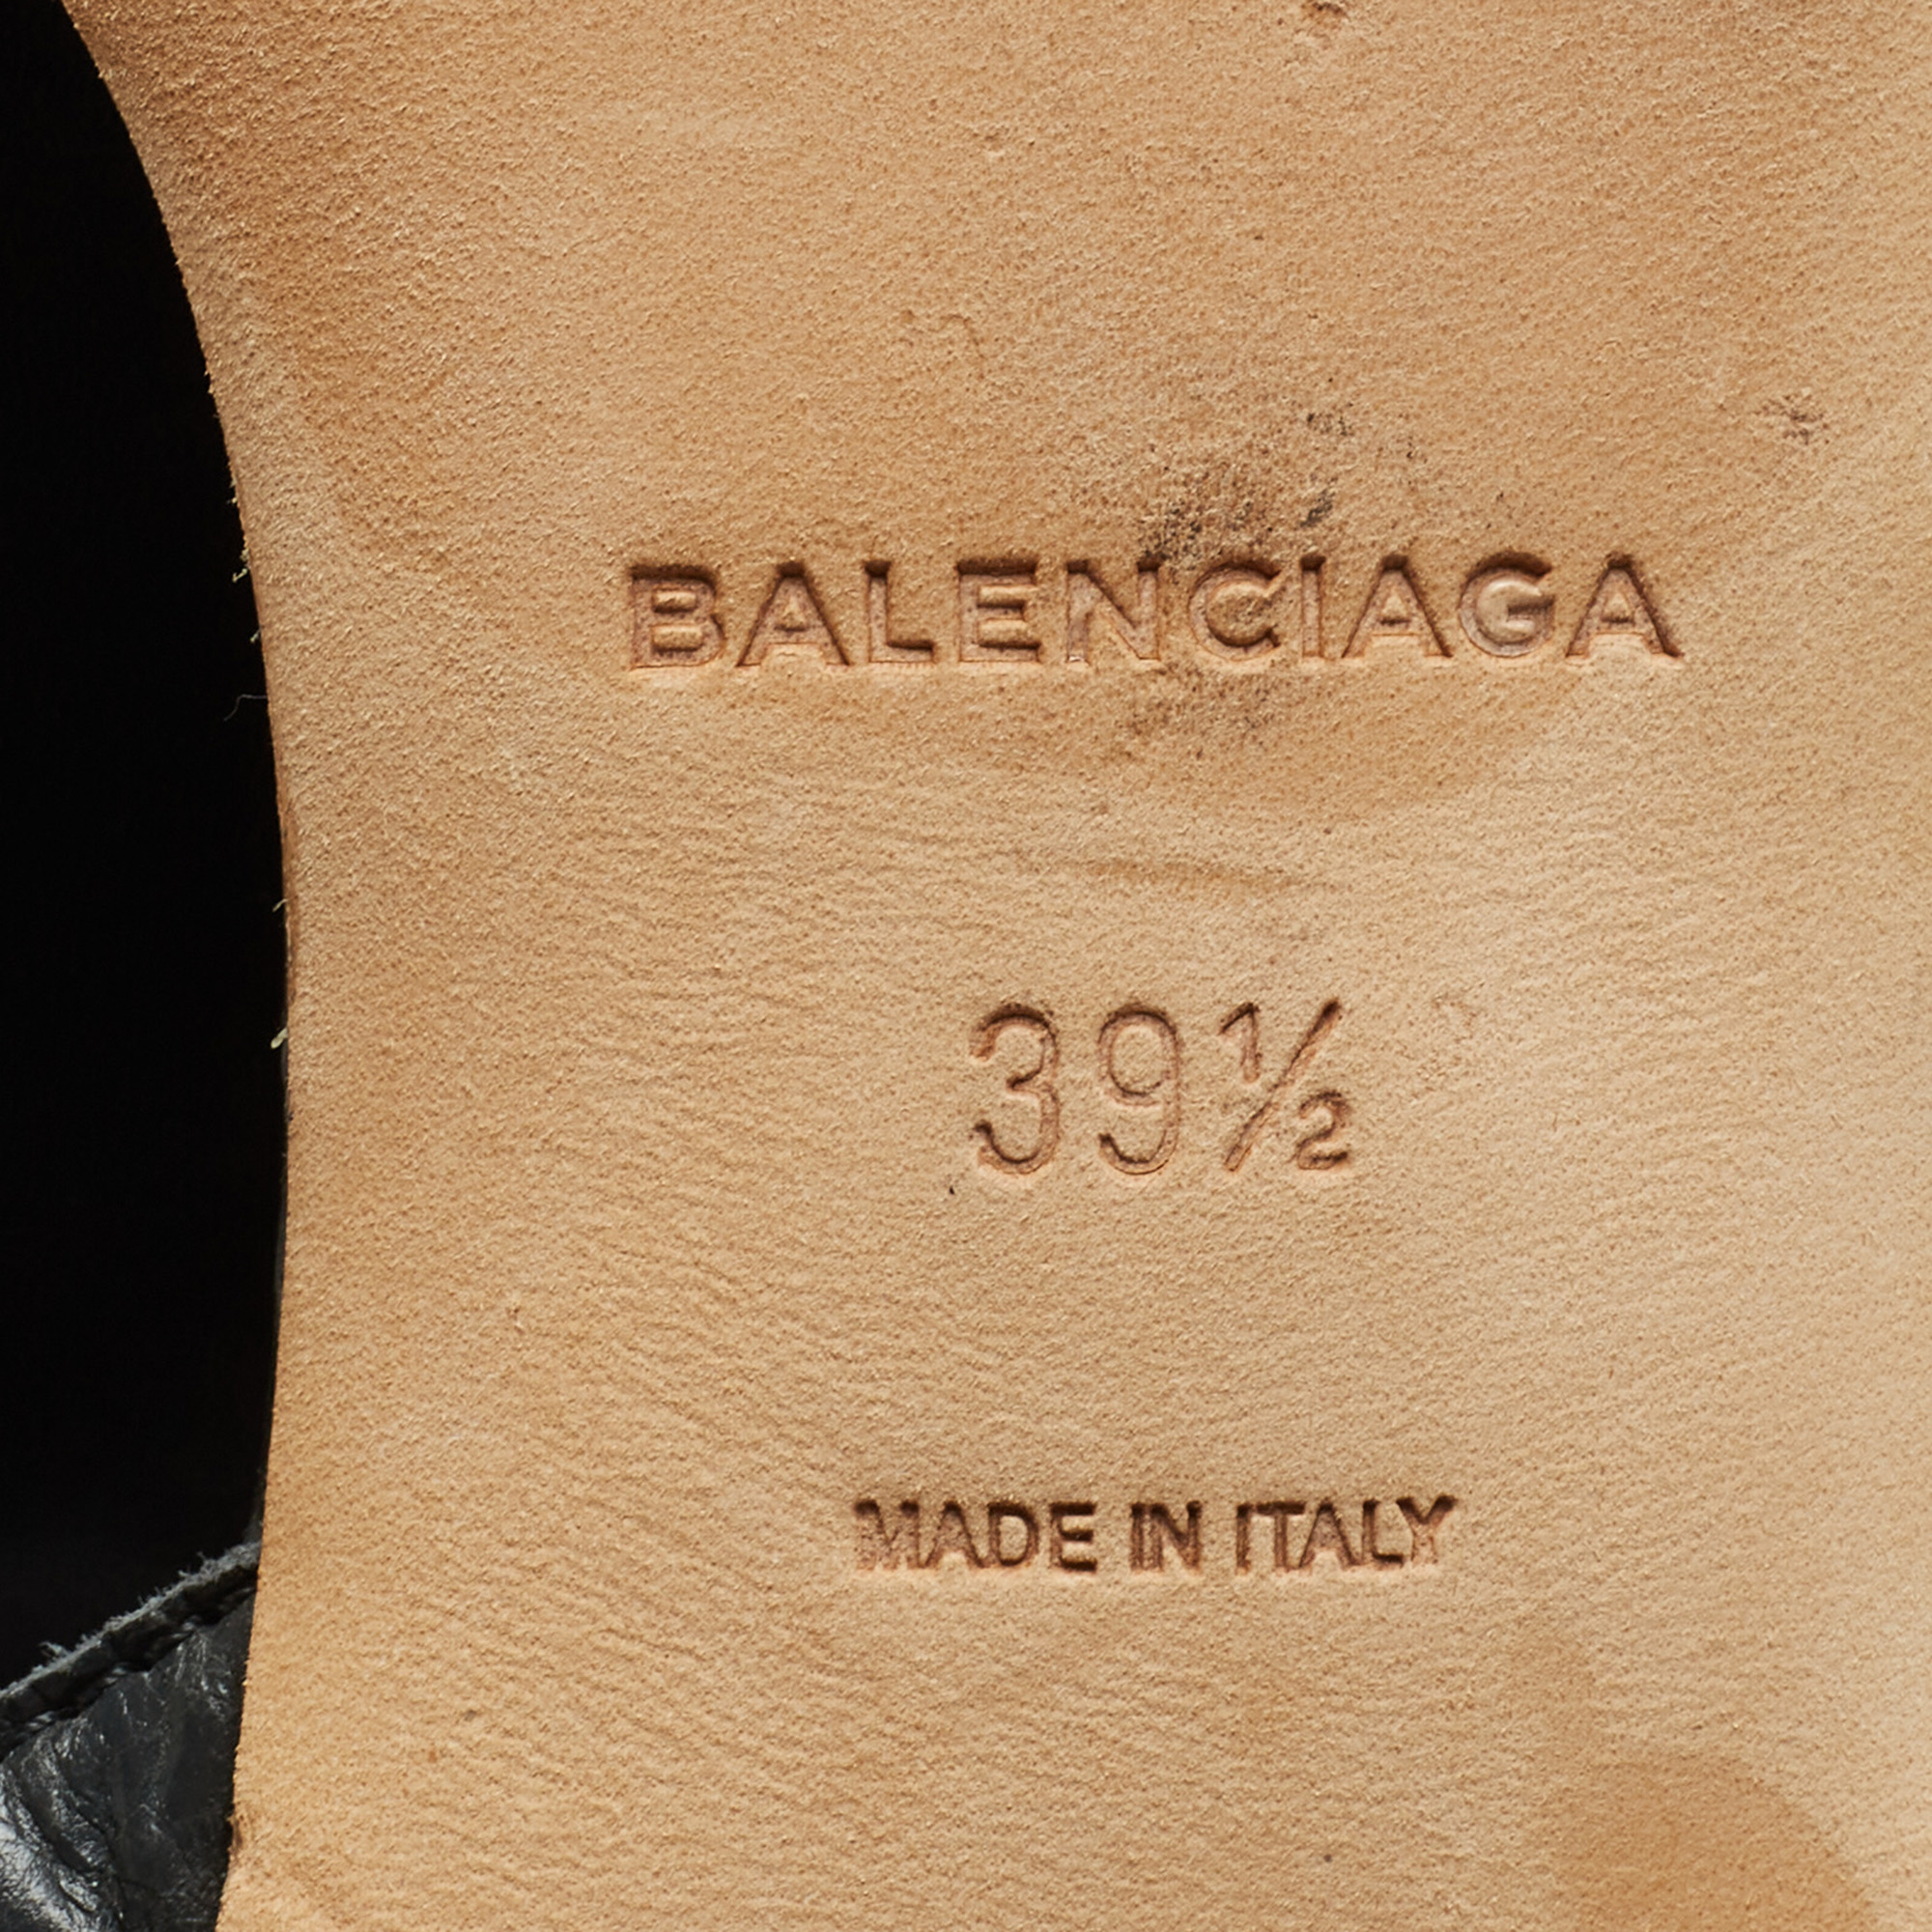 Balenciaga Dark Grey Leather Studded Ankle Strap Flat Sandals Size 39.5